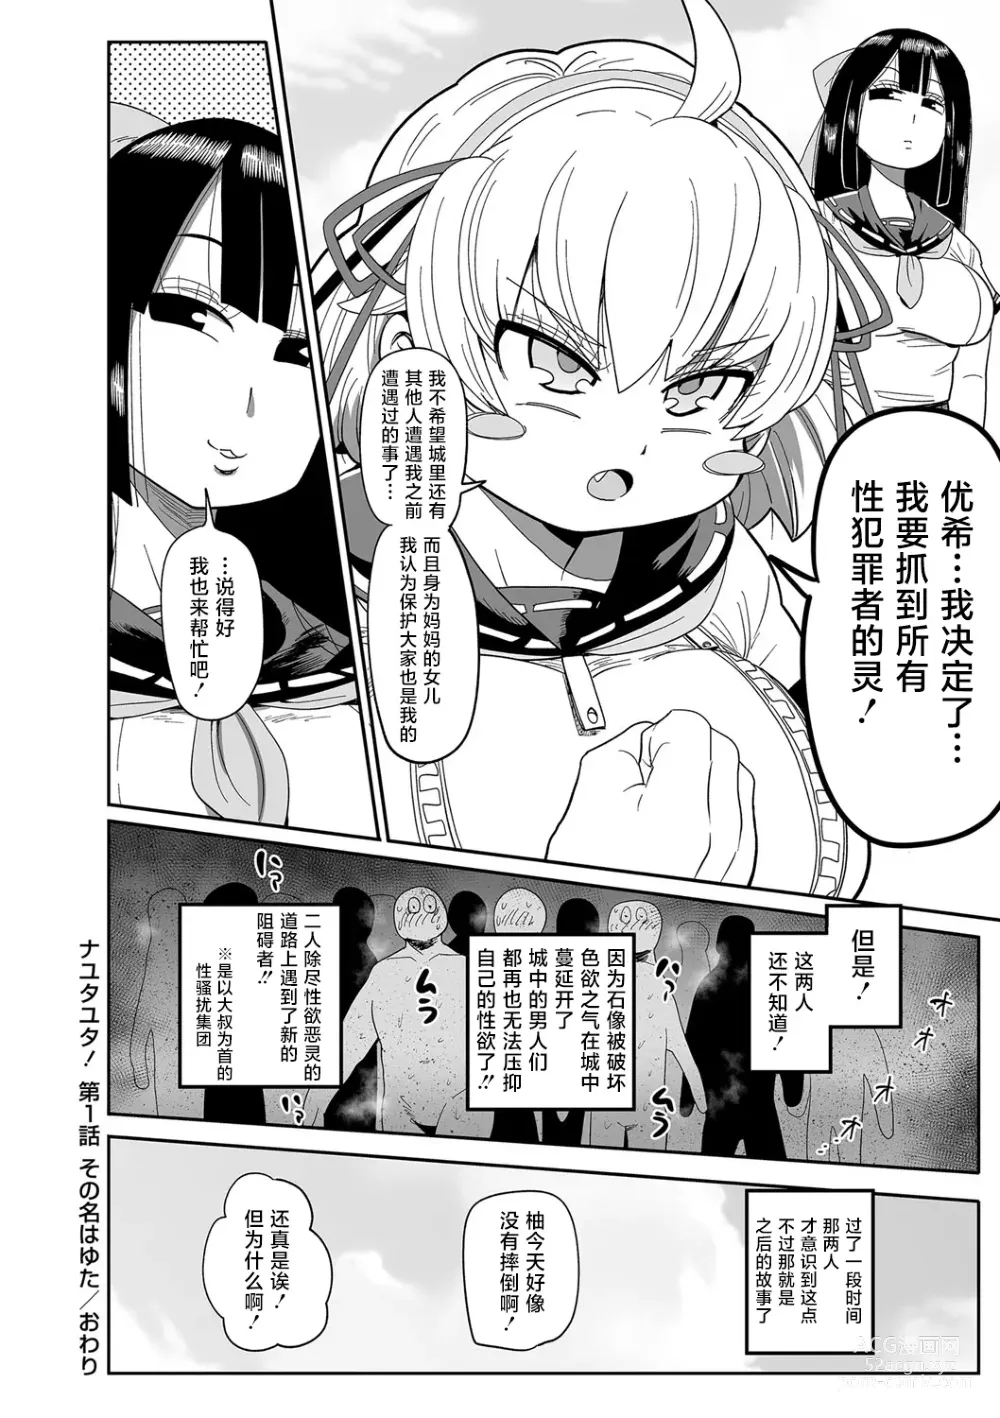 Page 20 of manga Nayutayuta! Ch. 1 Sono Kimi wa Yuta